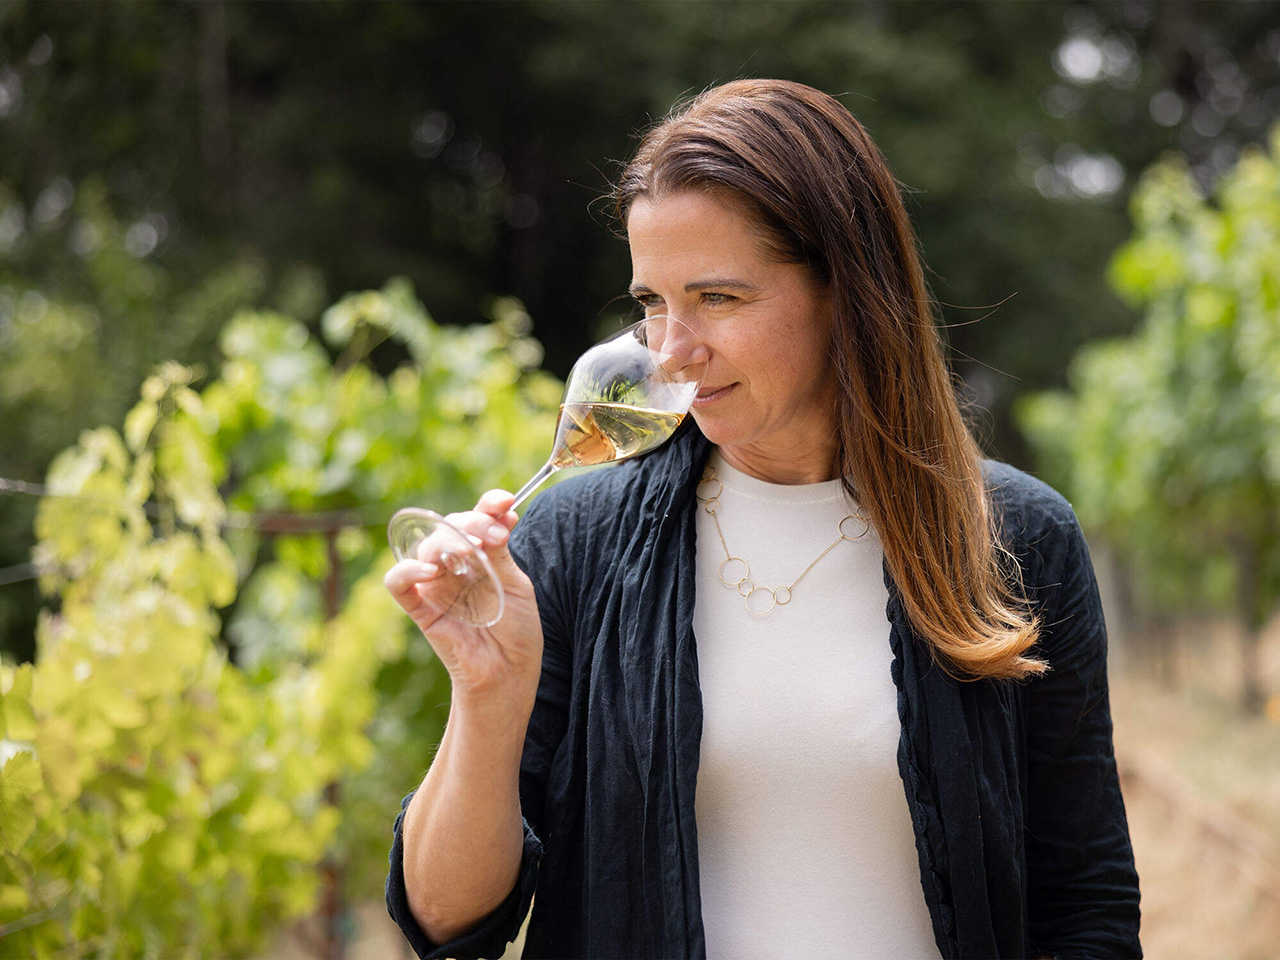 Winemaker Nicole Hitchcock drinking wine in the vineyard.